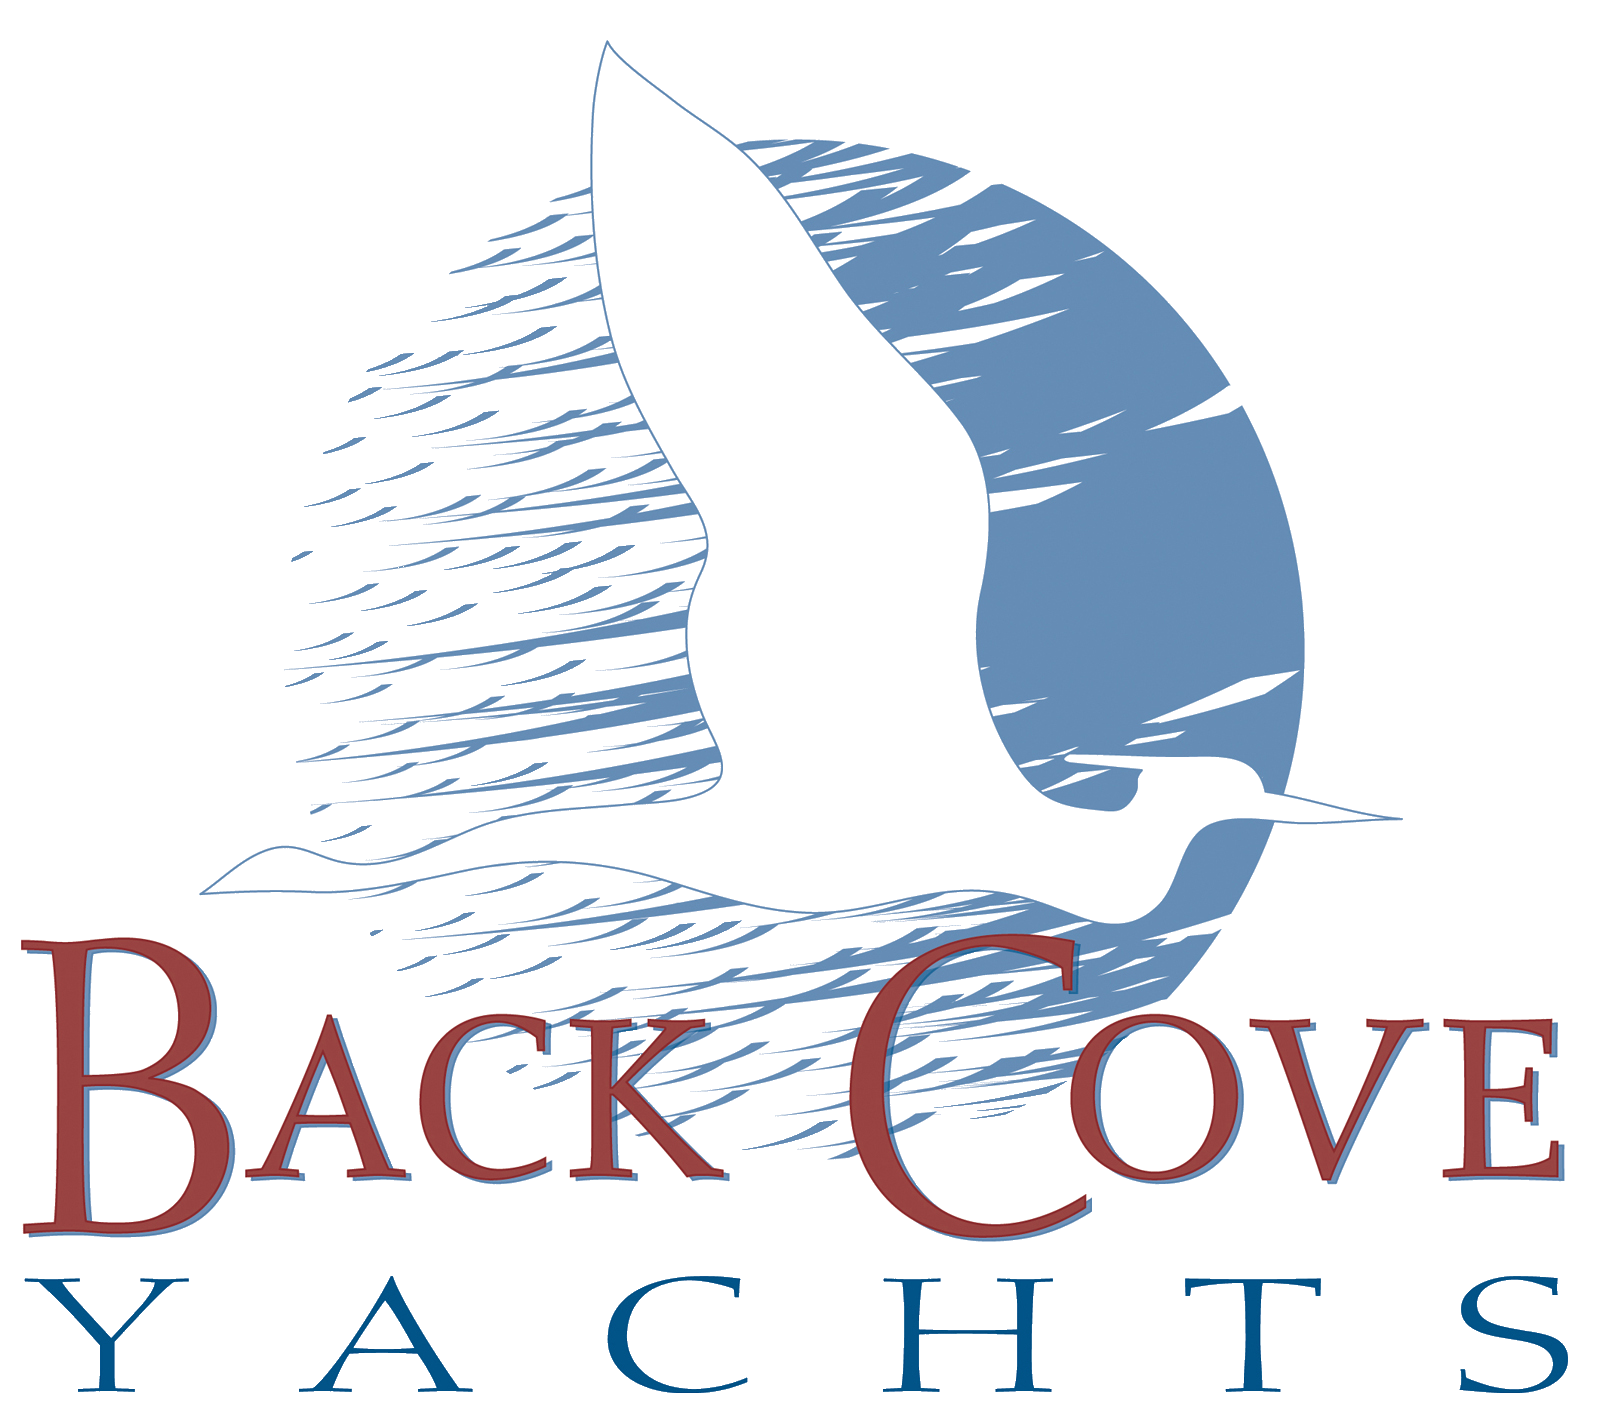 Back Cove brand logo